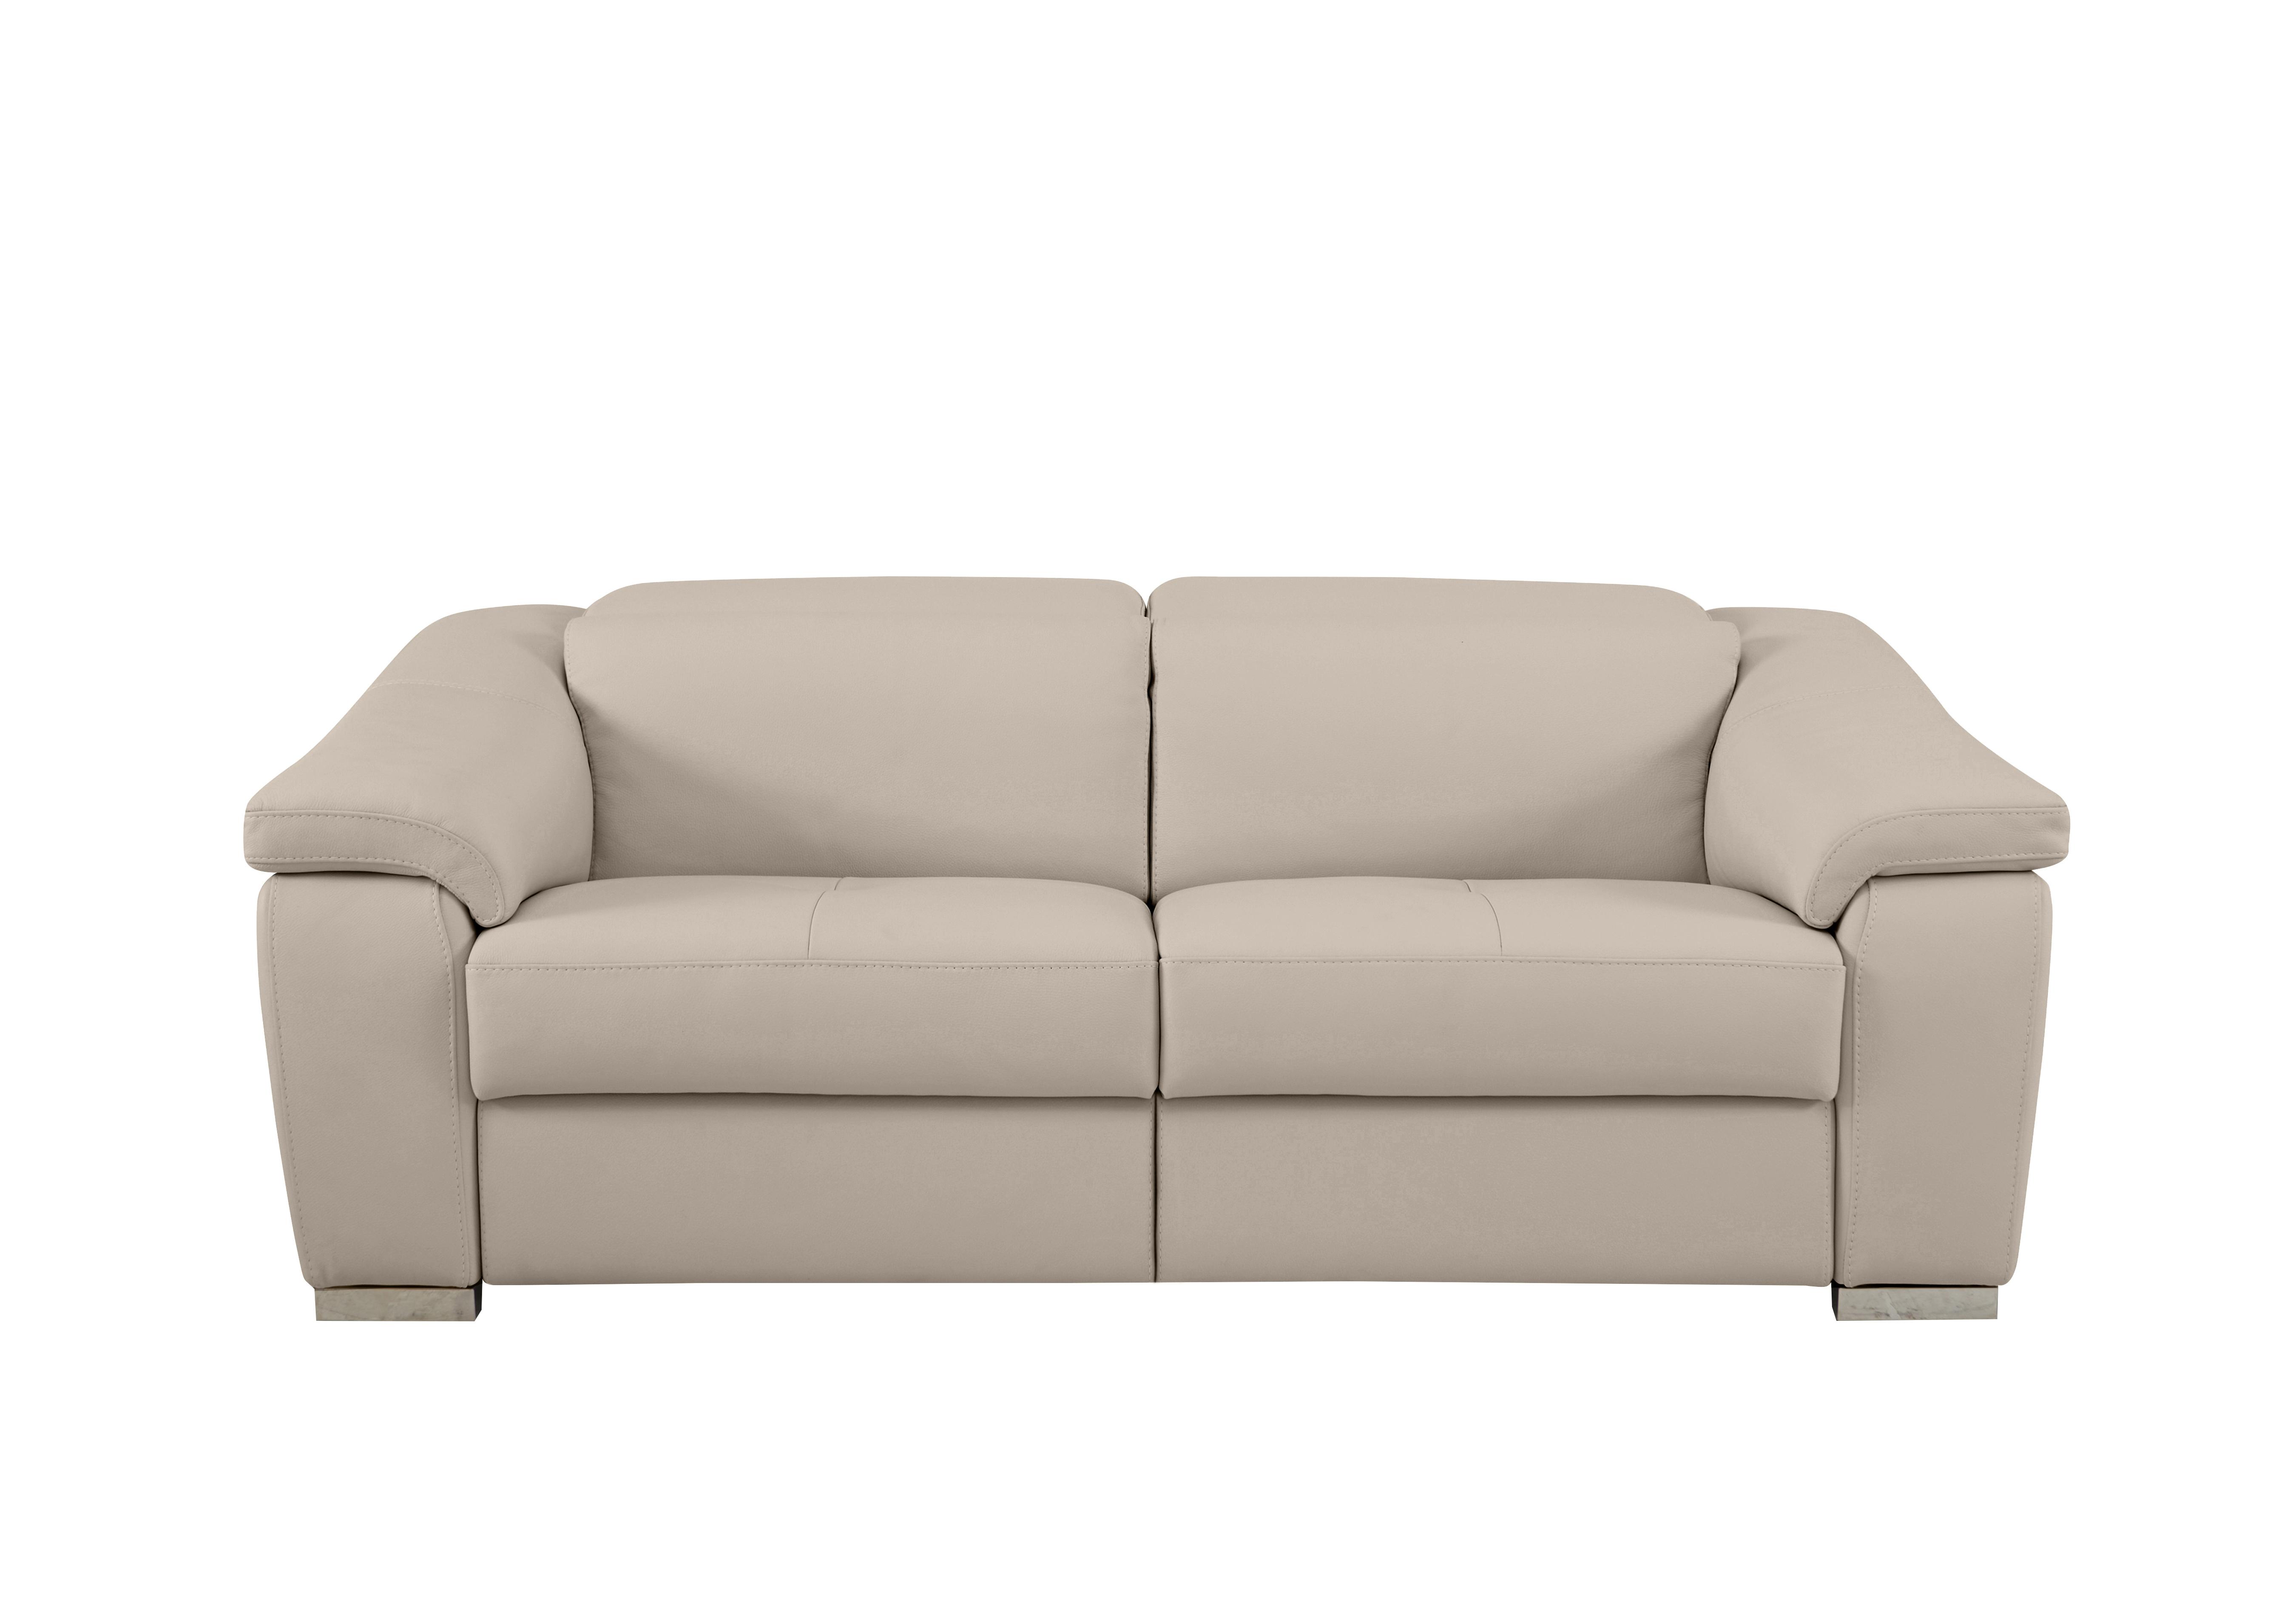 Galileo 3 Seater Leather Sofa in Botero Crema 2156 Ch on Furniture Village